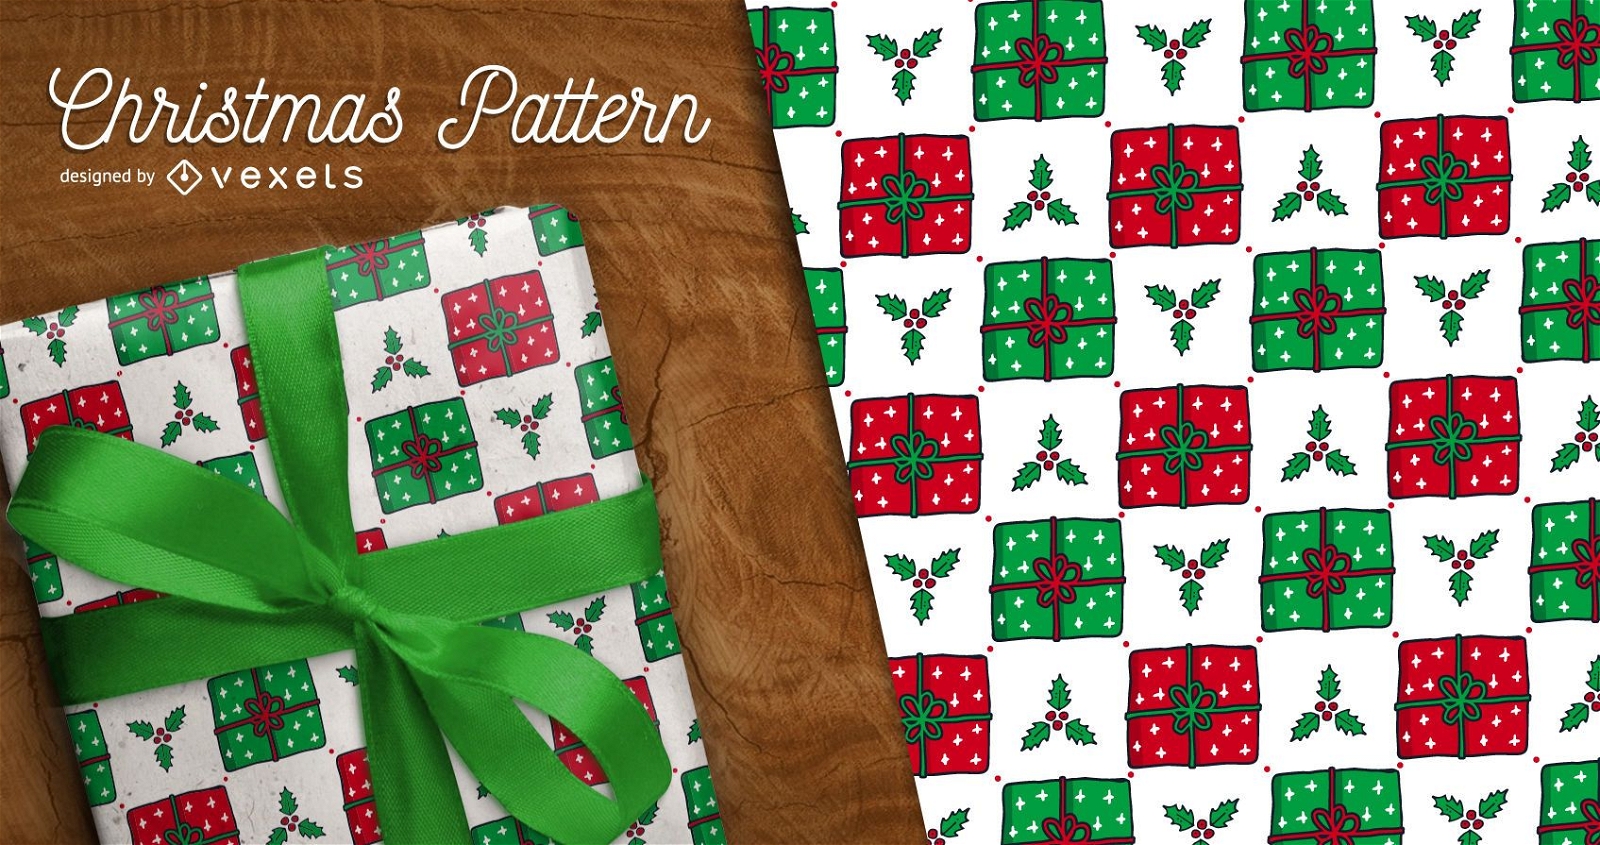 Christmas mistletoe pattern background